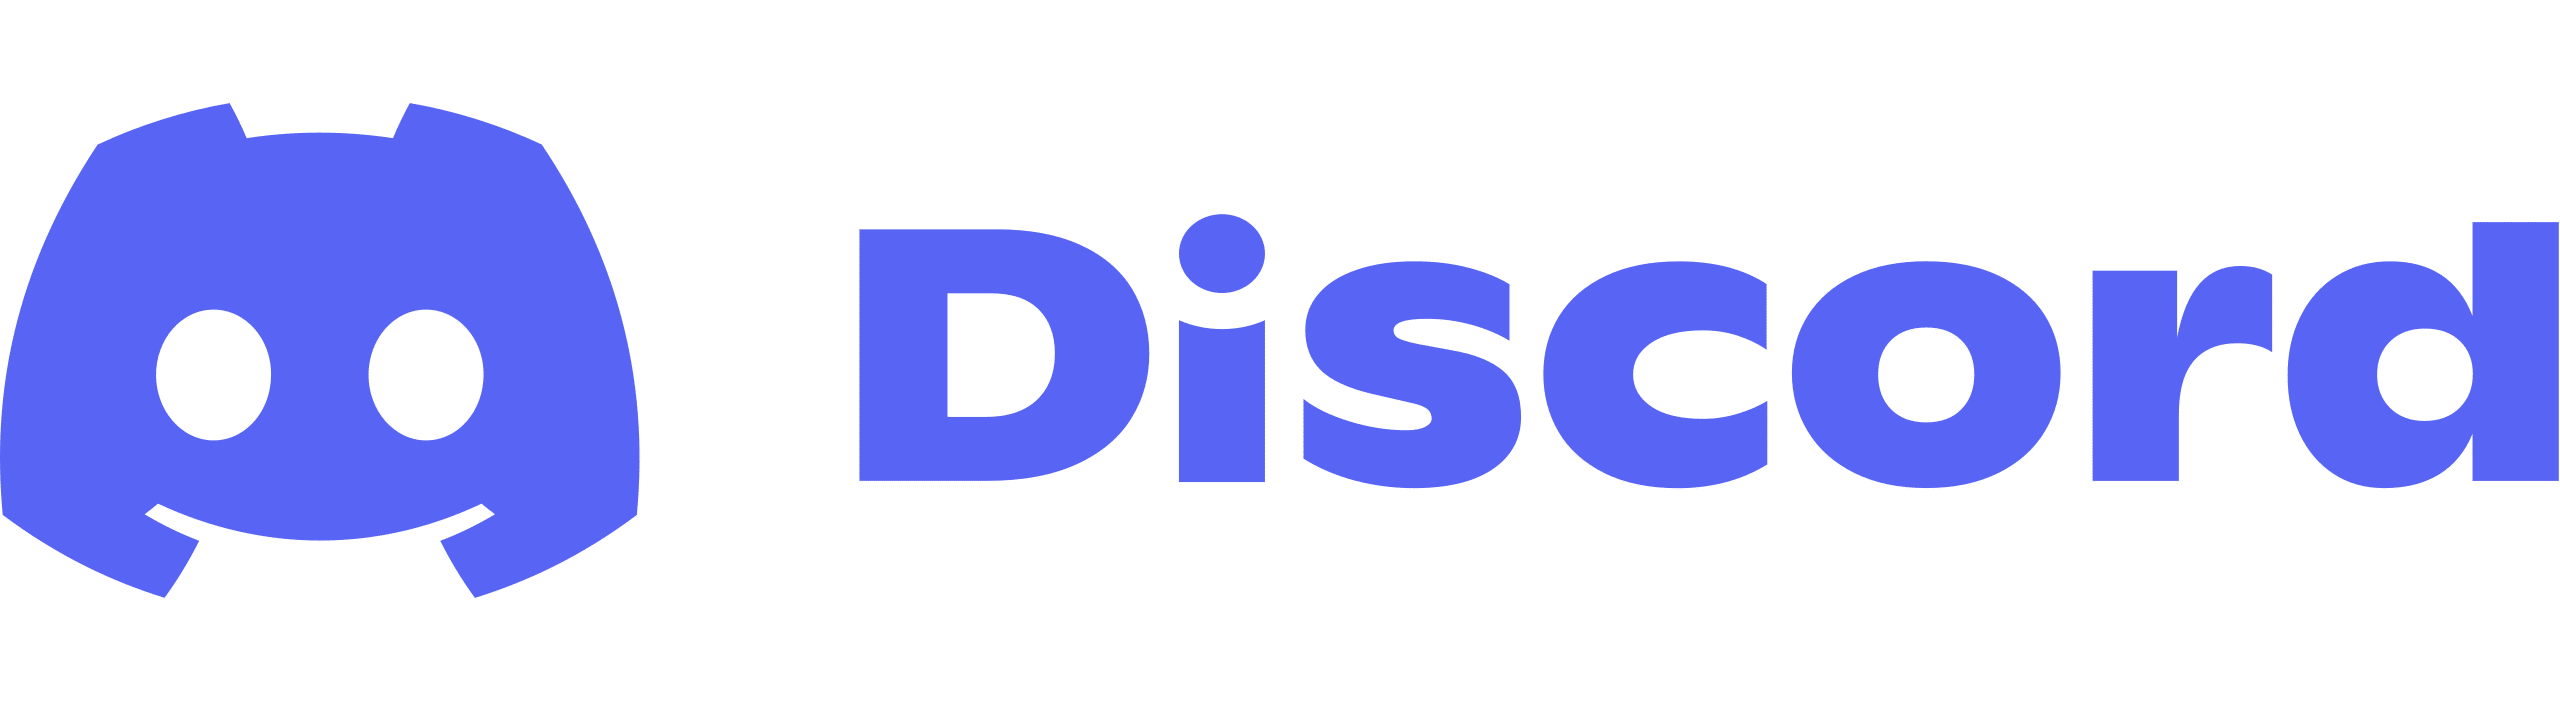 Logo de l'application discord.Image prise via Internet